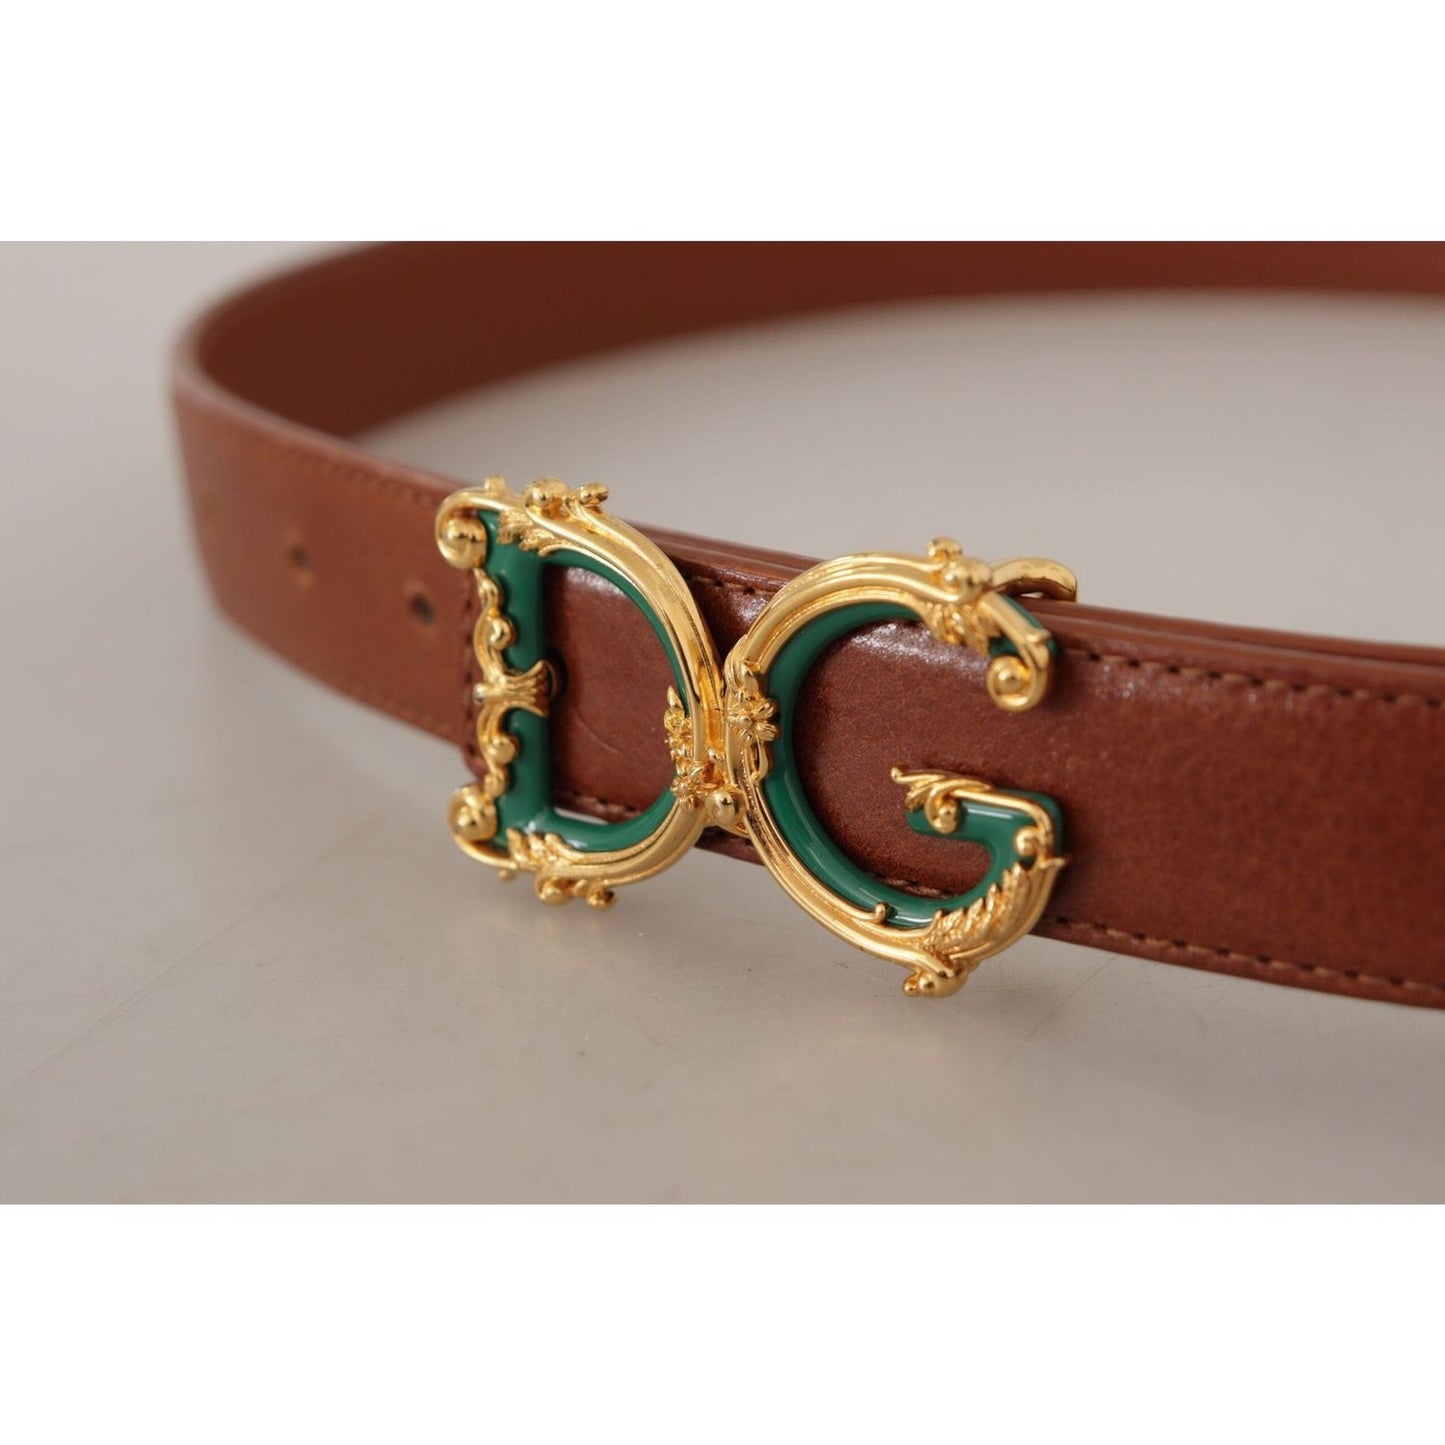 Dolce & Gabbana Elegant Leather Belt with Logo Buckle brown-leather-baroque-gold-dg-logo-waist-buckle-belt IMG_8927-scaled-aedc7f98-e25.jpg